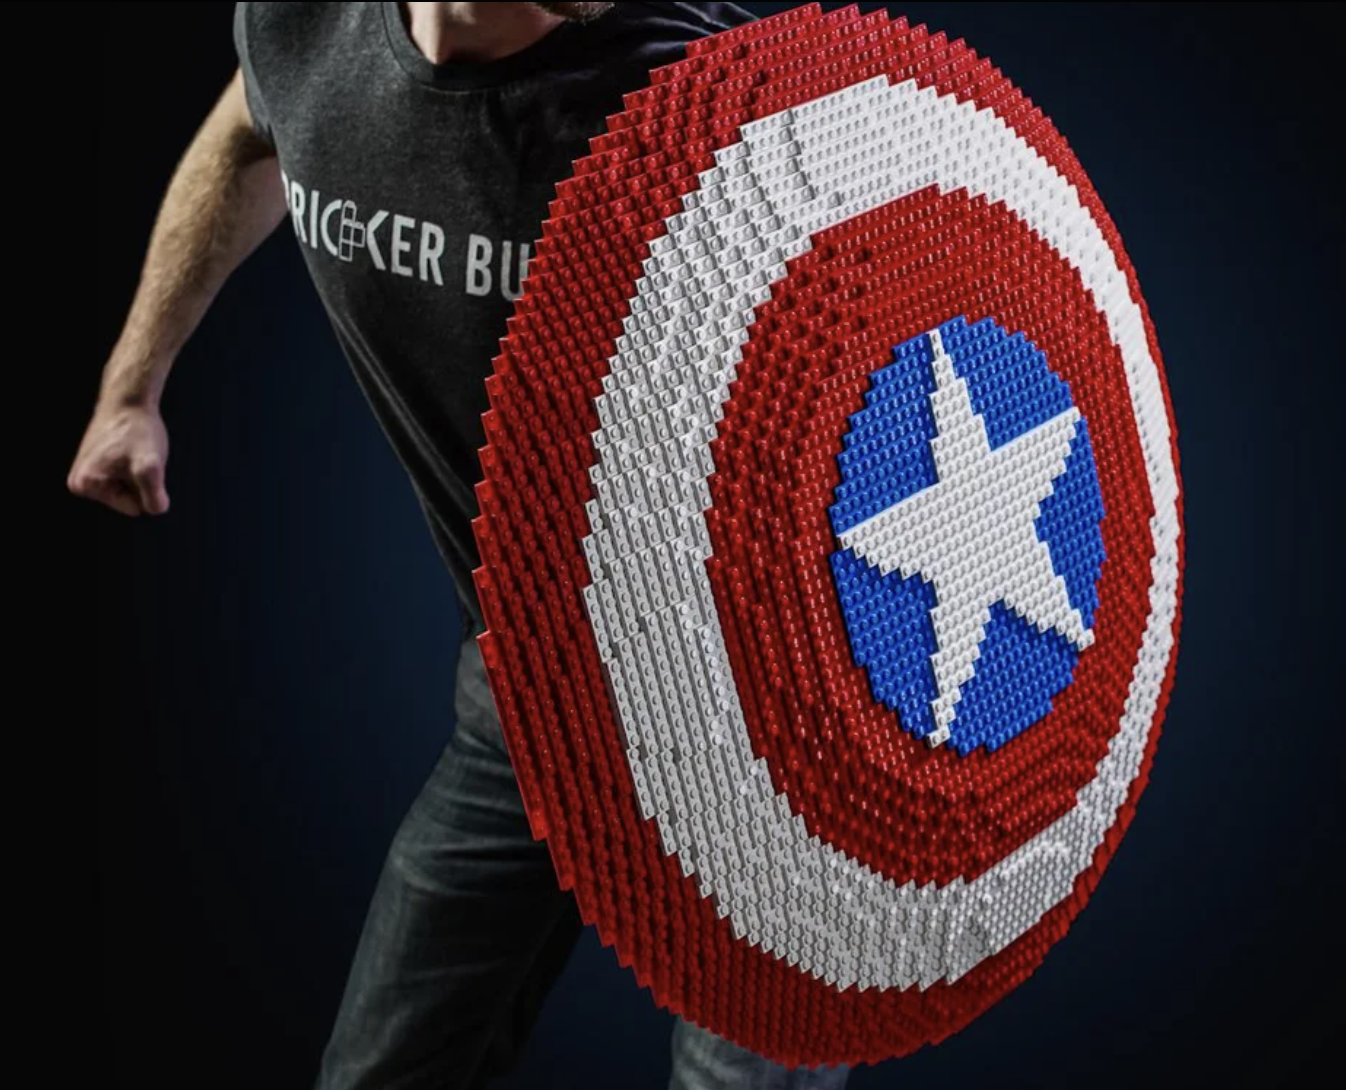 Captain America's shield in LEGO form.